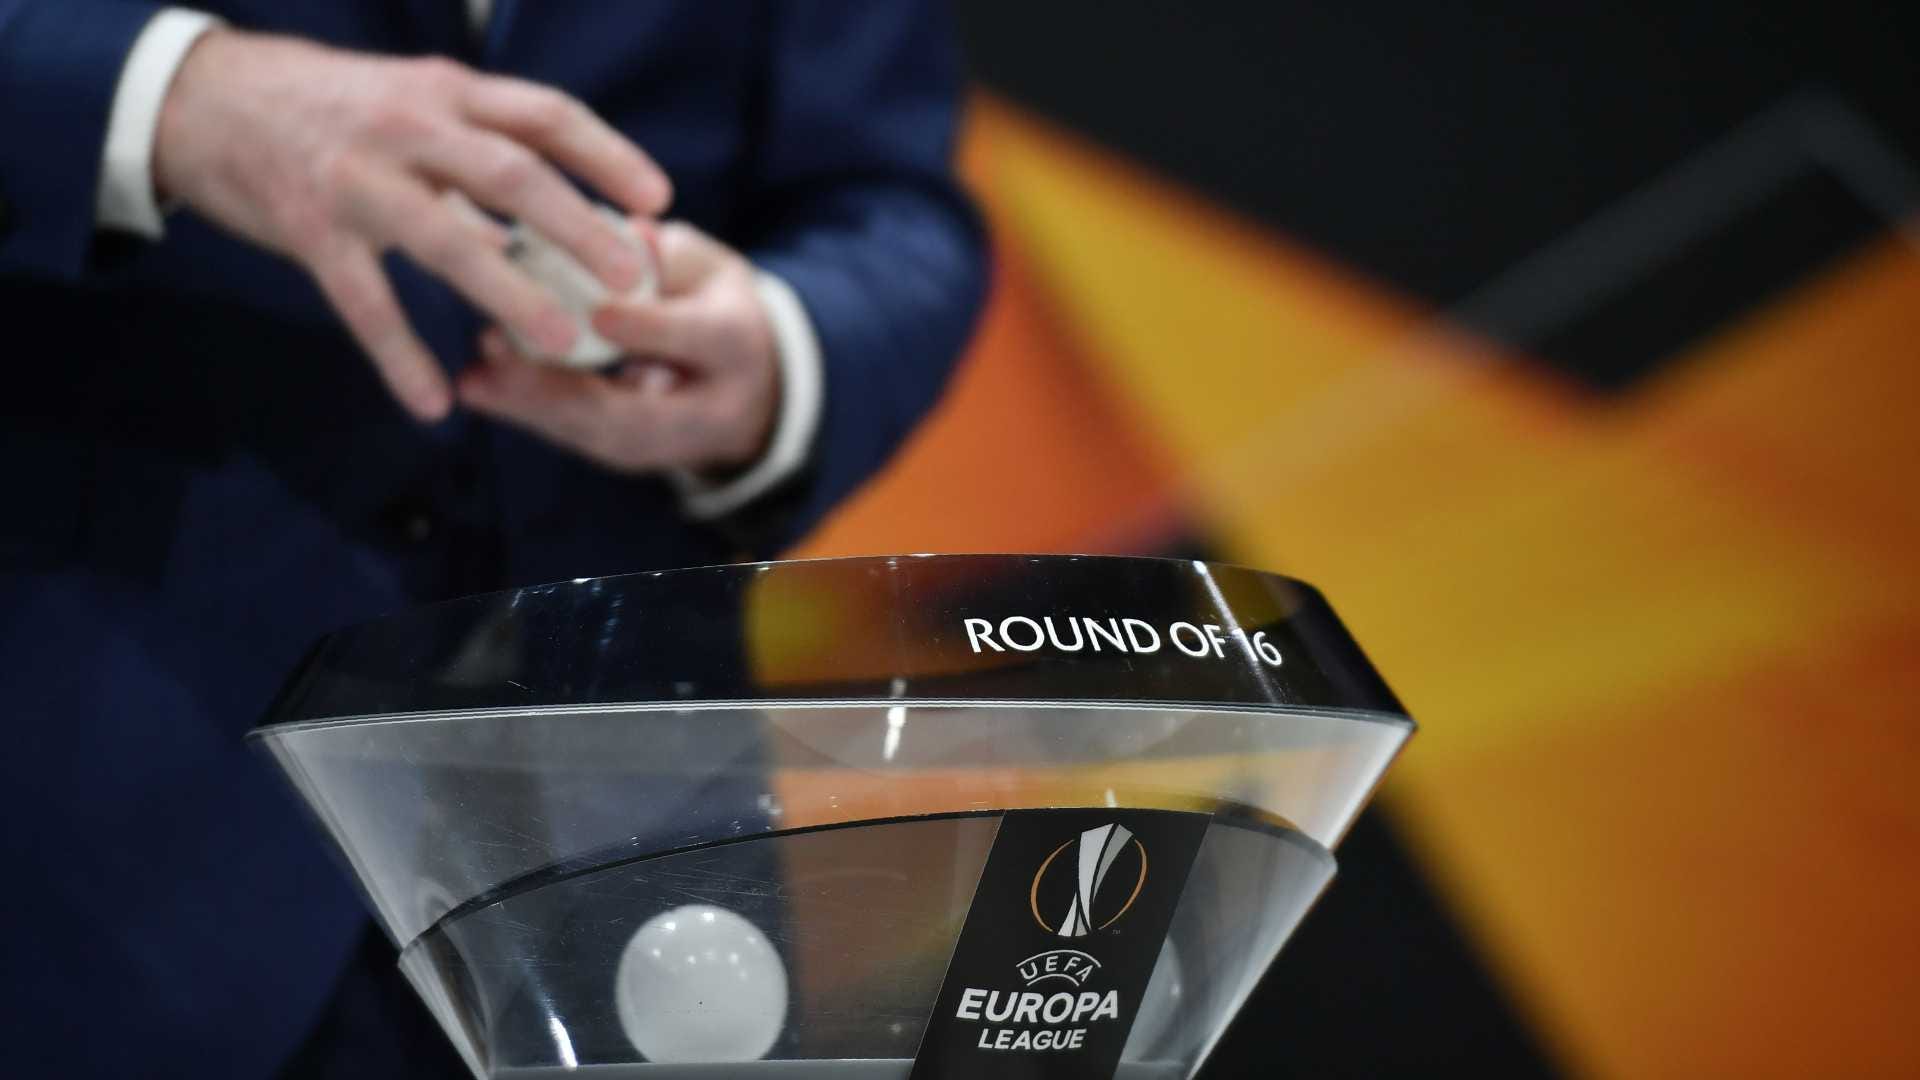 20220223 Europa League Round 16 draw